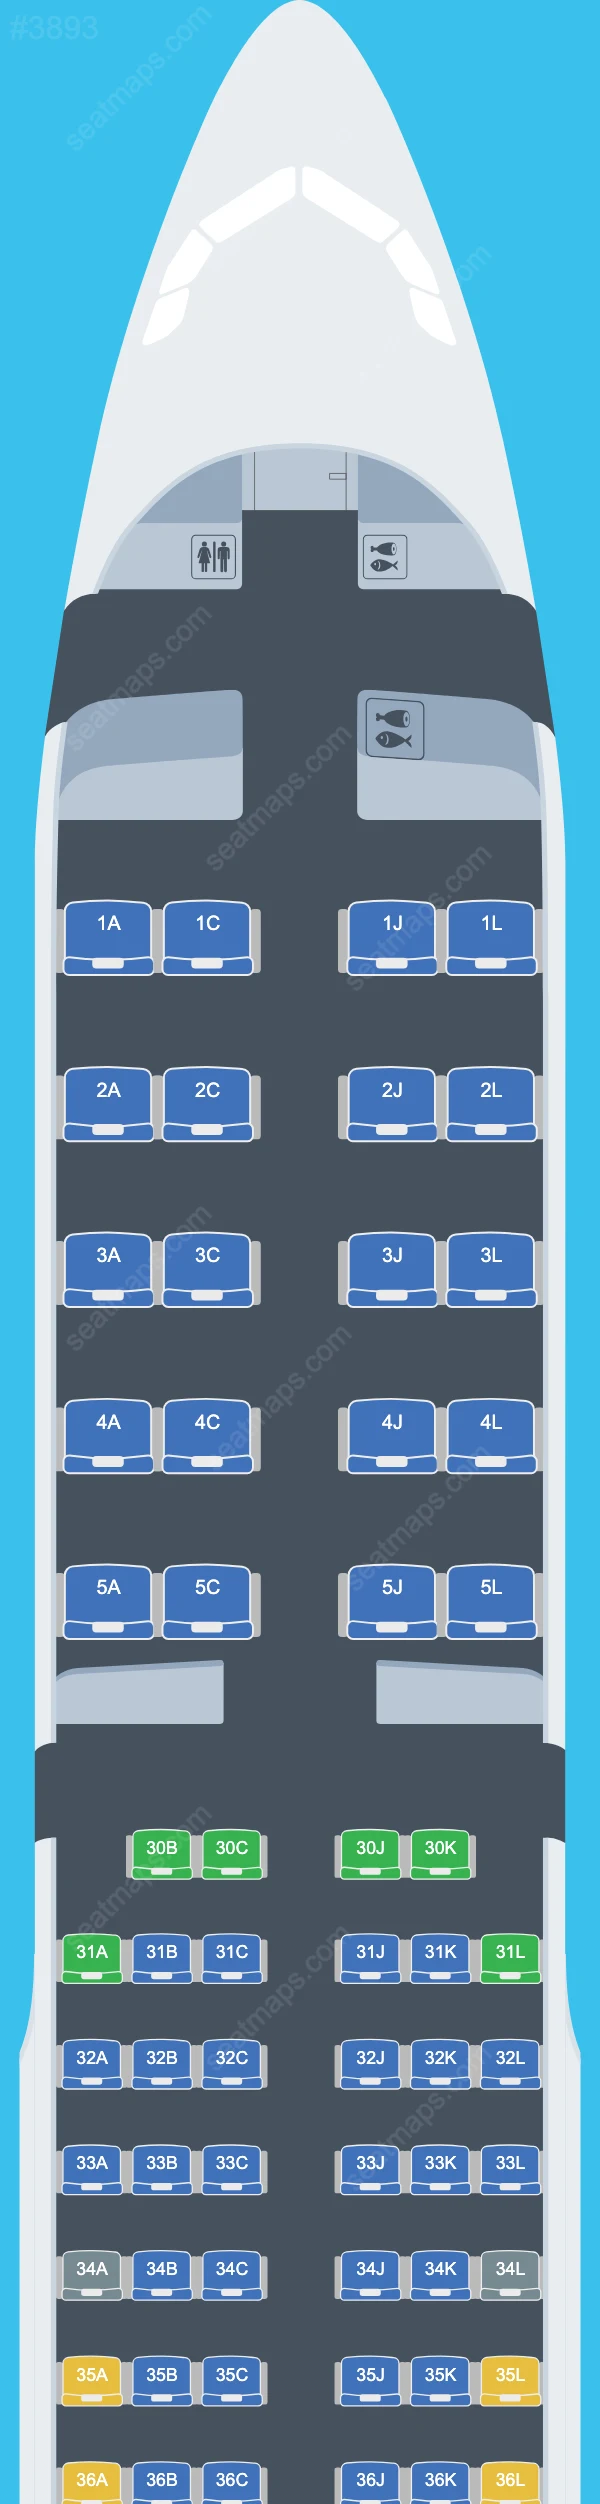 Saudia Airbus A321 Seat Maps A321-200